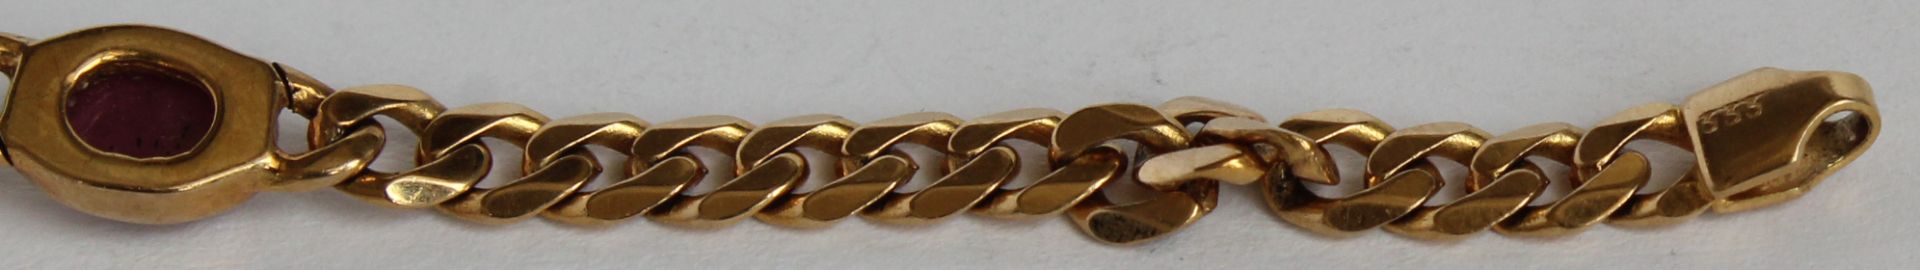 Armkette. Gold 333. Safir, Smaragd, Rubin. - Image 4 of 7